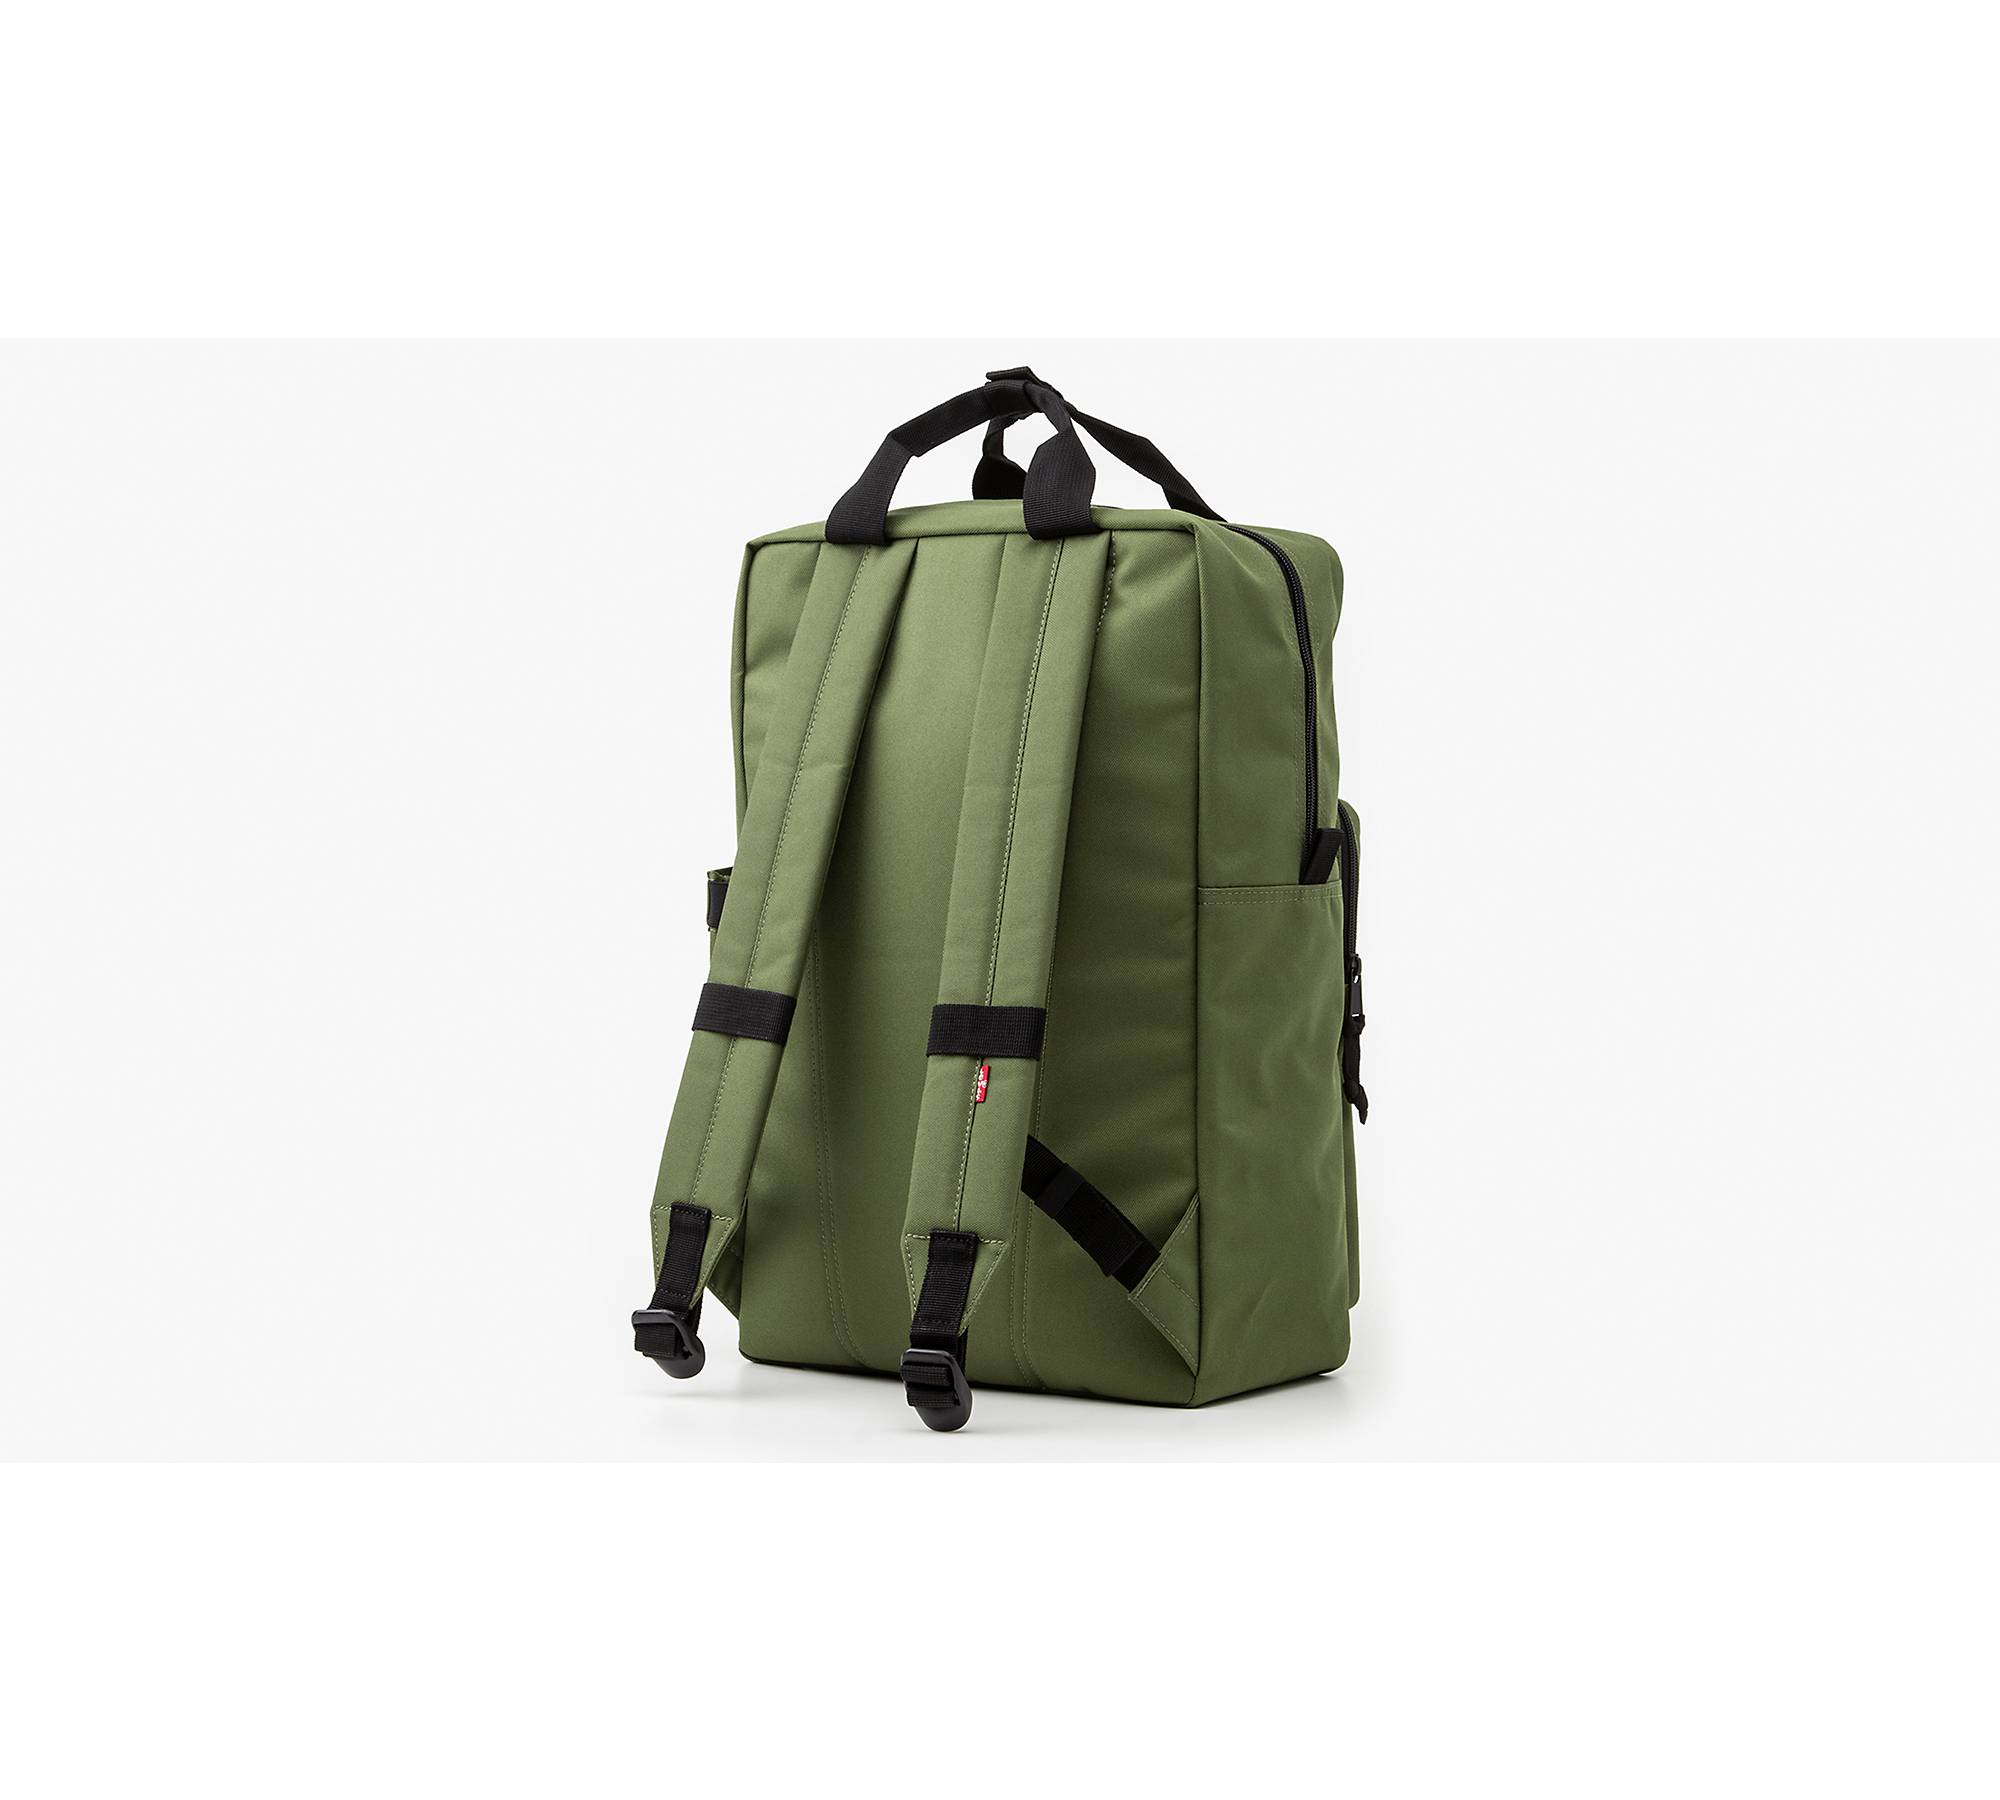 Levi's® L-pack Large - Green